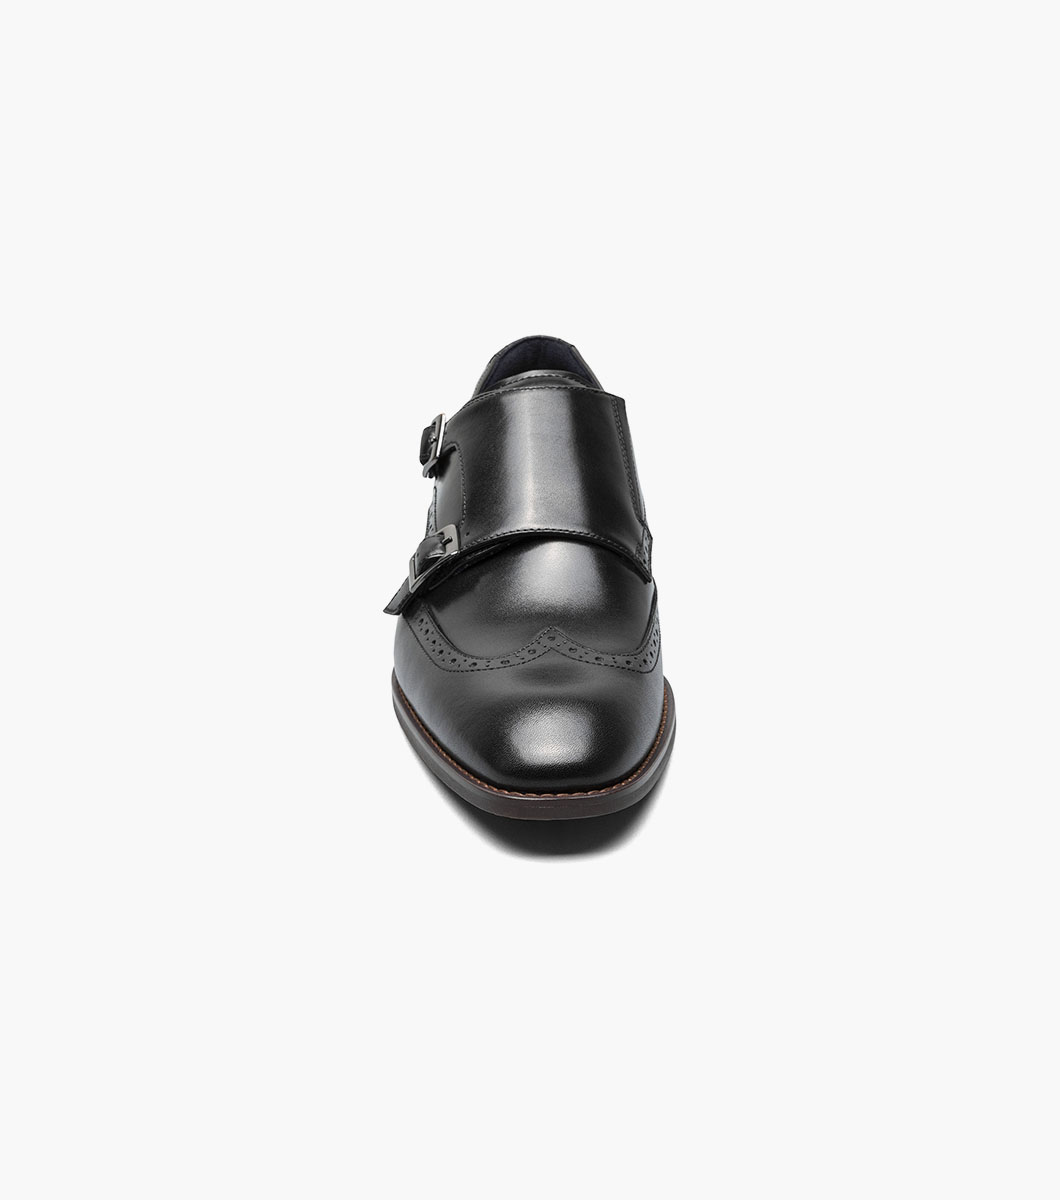 Forzieri Men's Brown Leather Double Monk Strap Shoes 5 (6 UK, 38.5/39 EU